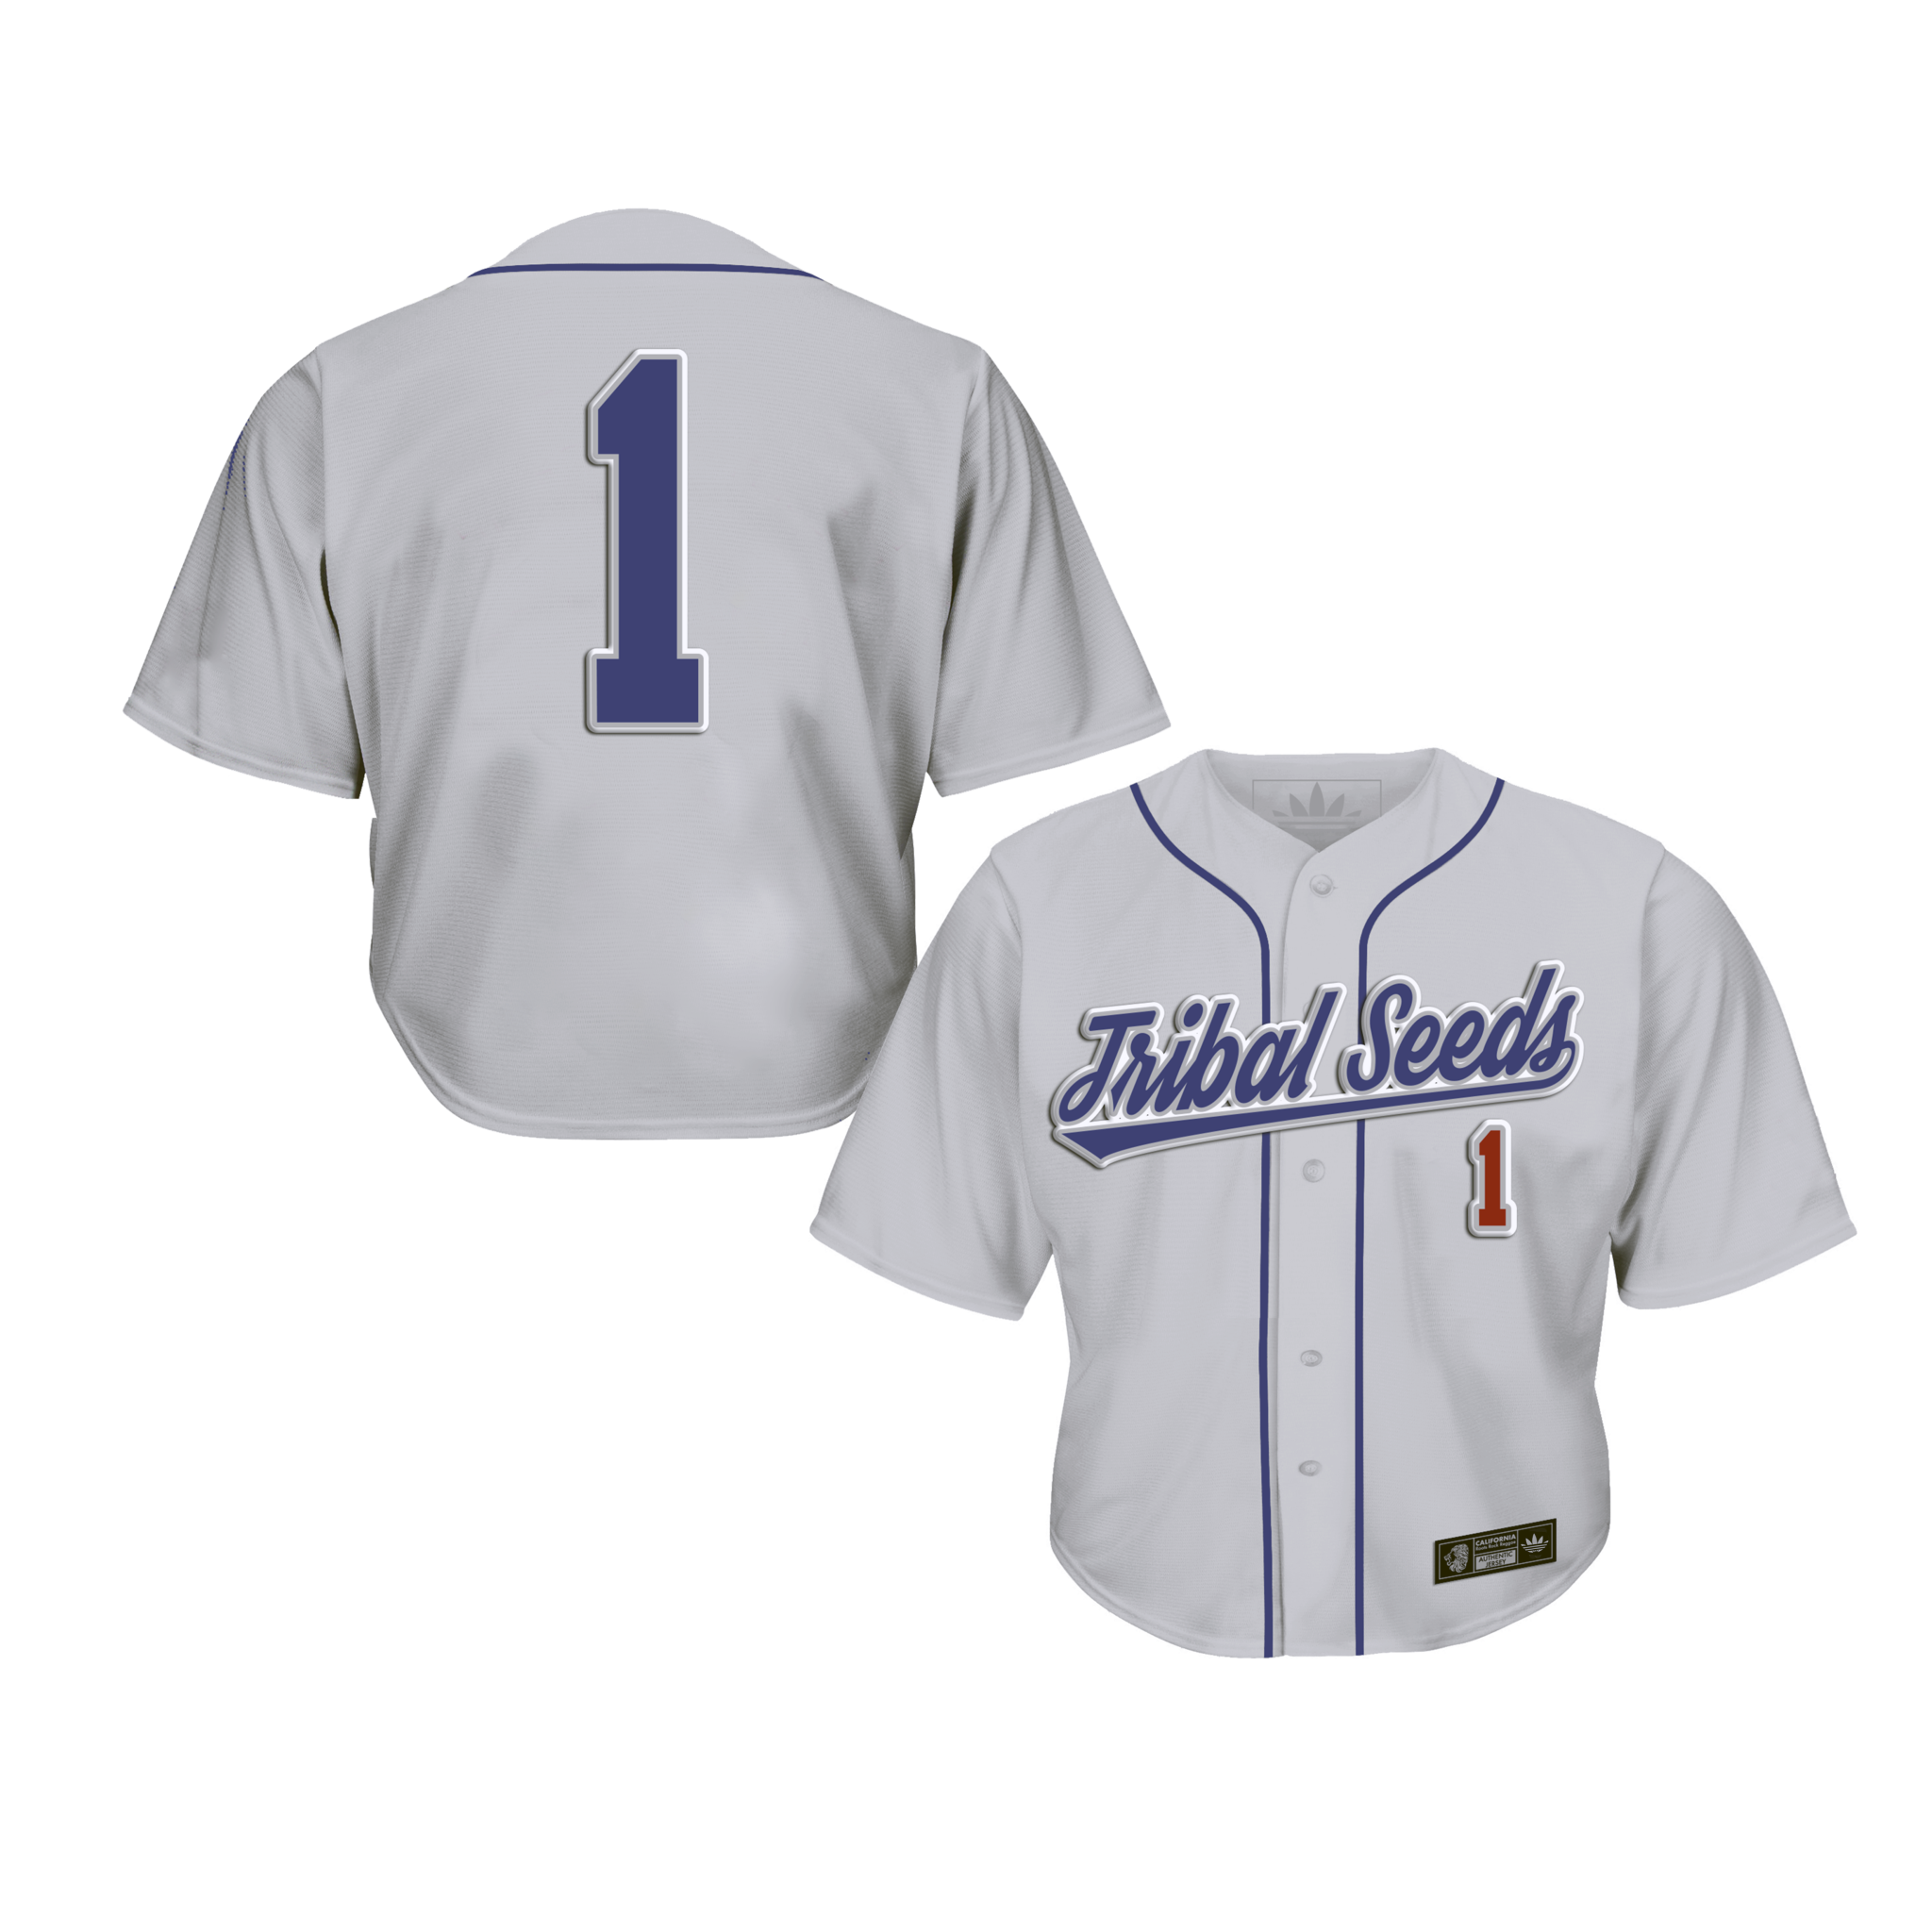 Blue/Gray Crop Top Baseball Jersey – Tribal Seeds Store